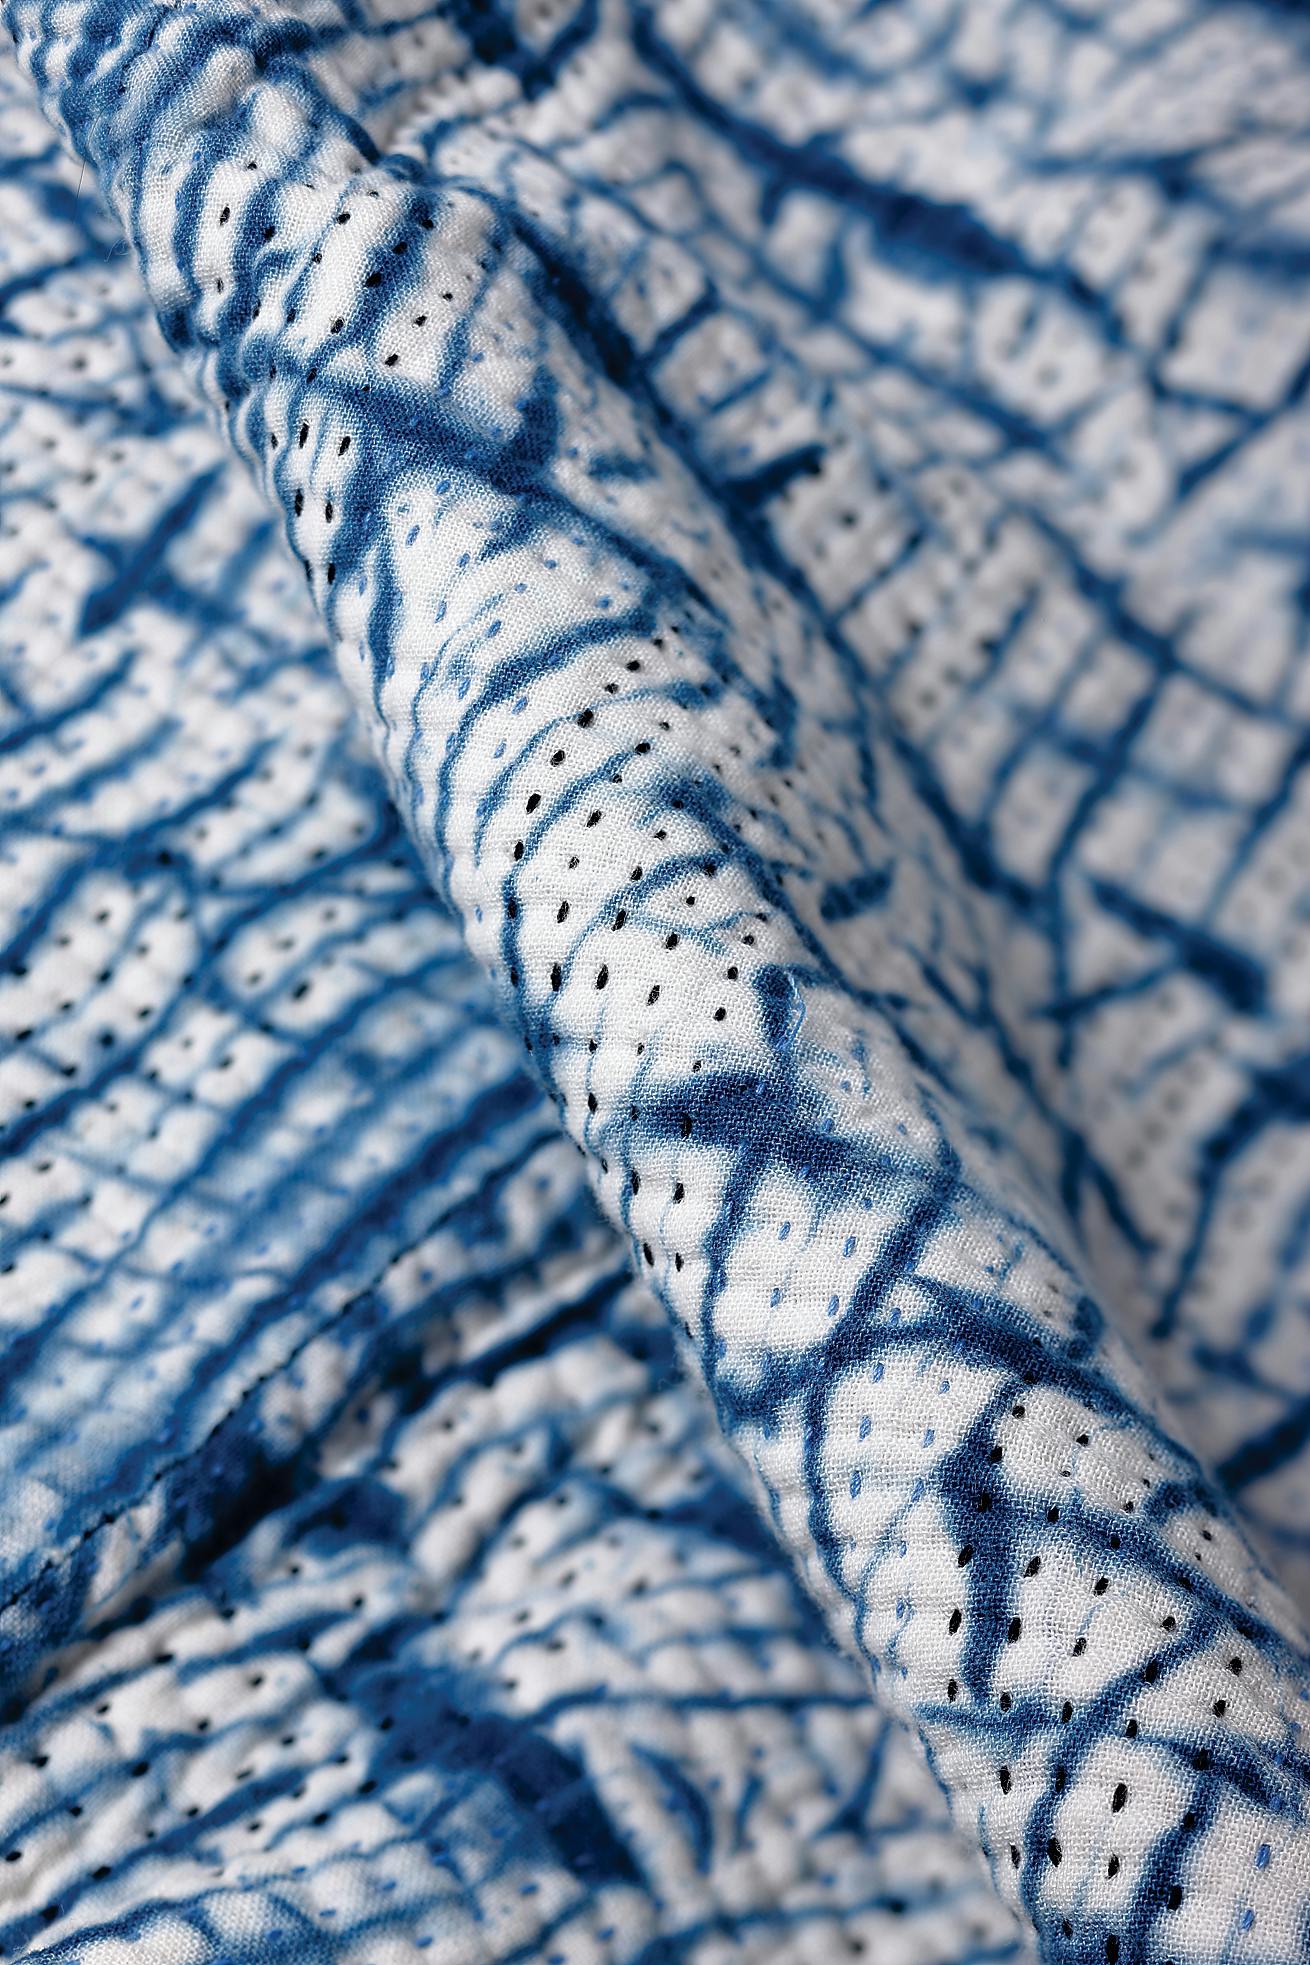 Shibori fabric by Living Blue